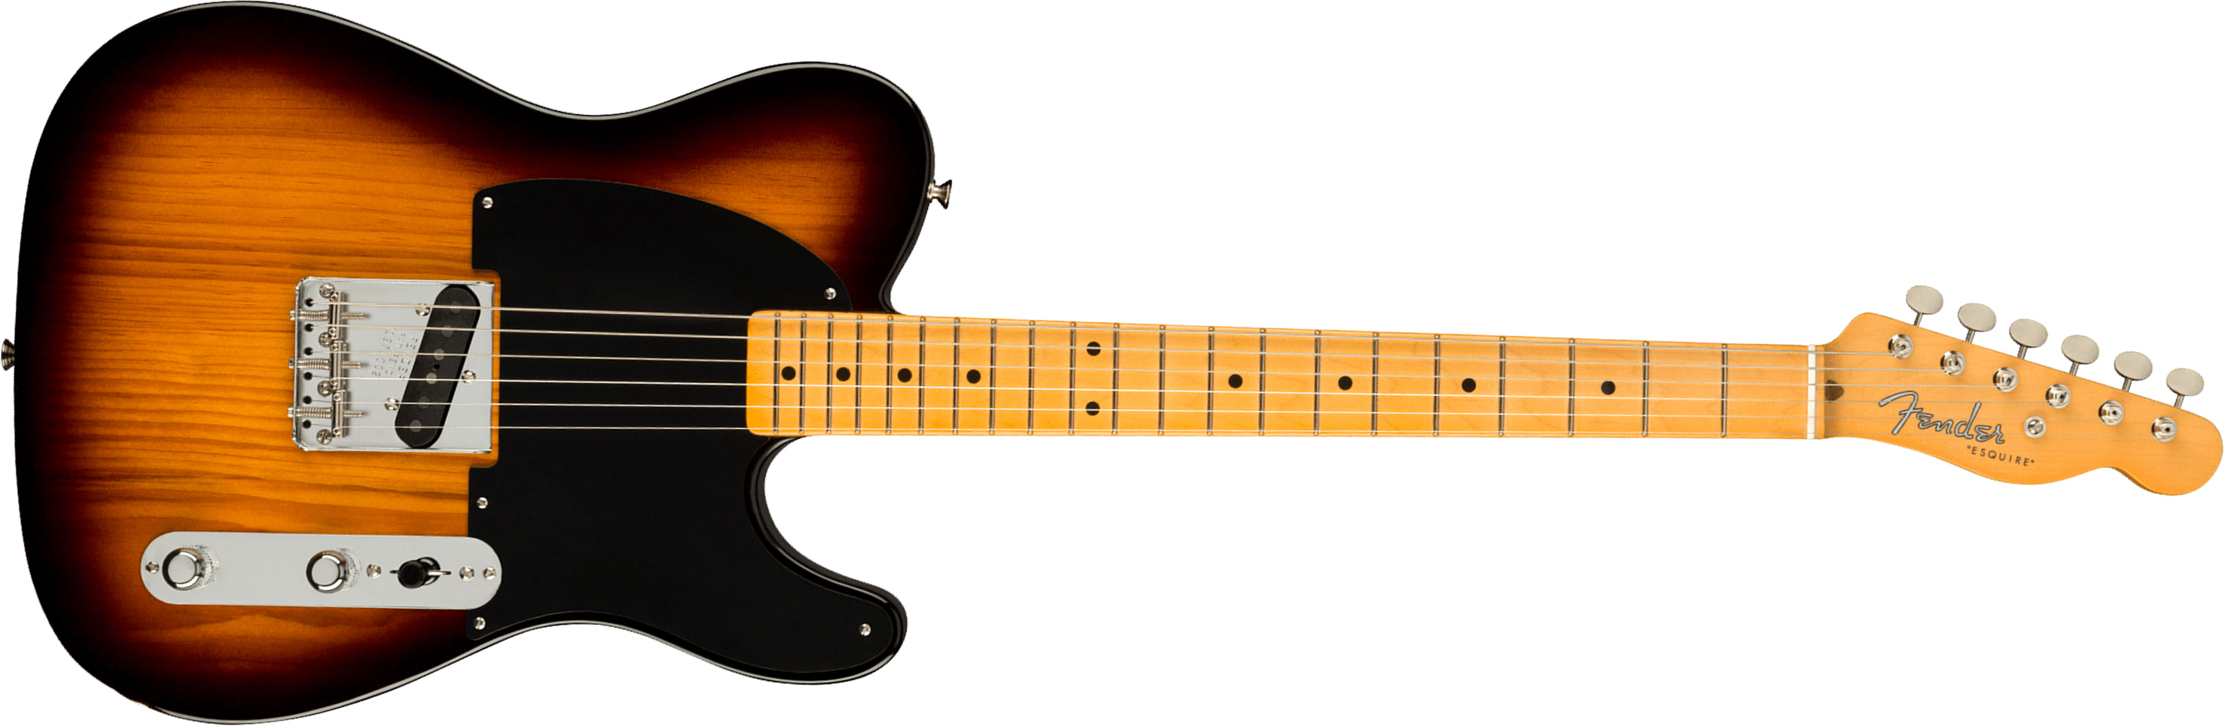 Fender Esquire/tele 70th Anniversary Usa Mn - 2-color Sunburst - Tel shape electric guitar - Main picture